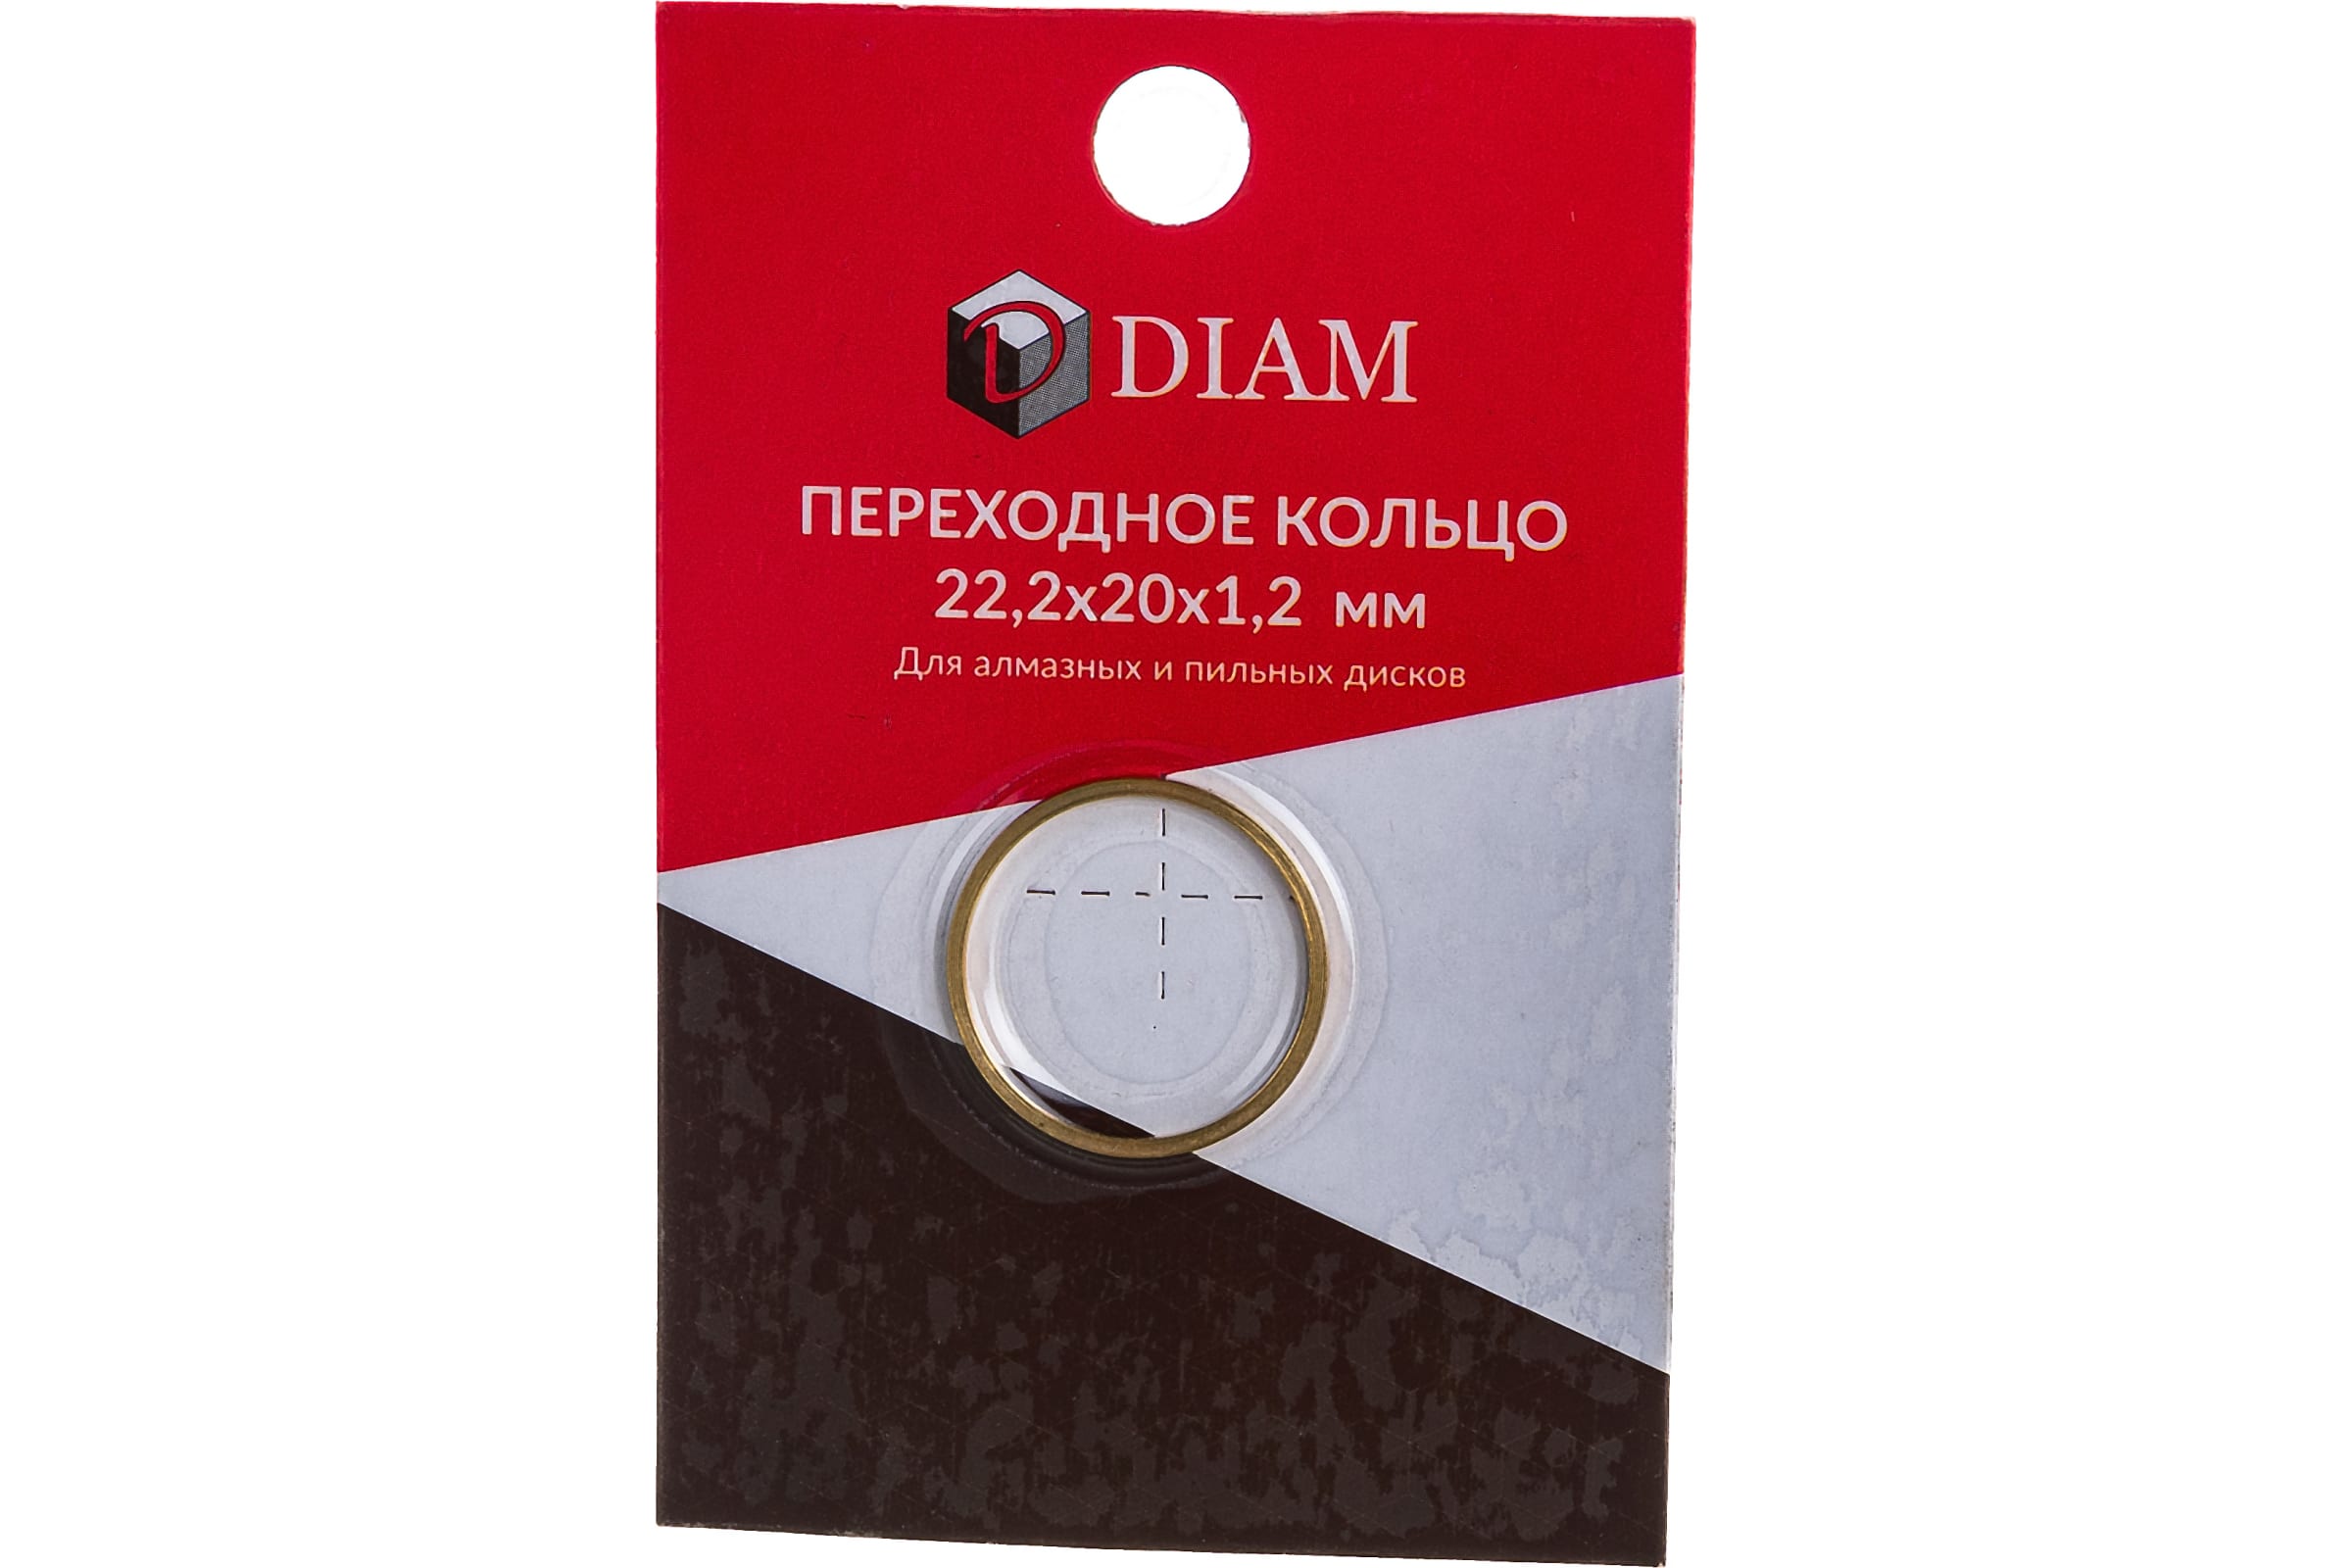 DIAM Переходное кольцо 22,2х20х1,2 640082 diam переходное кольцо 25 4х22 2х1 2 640084